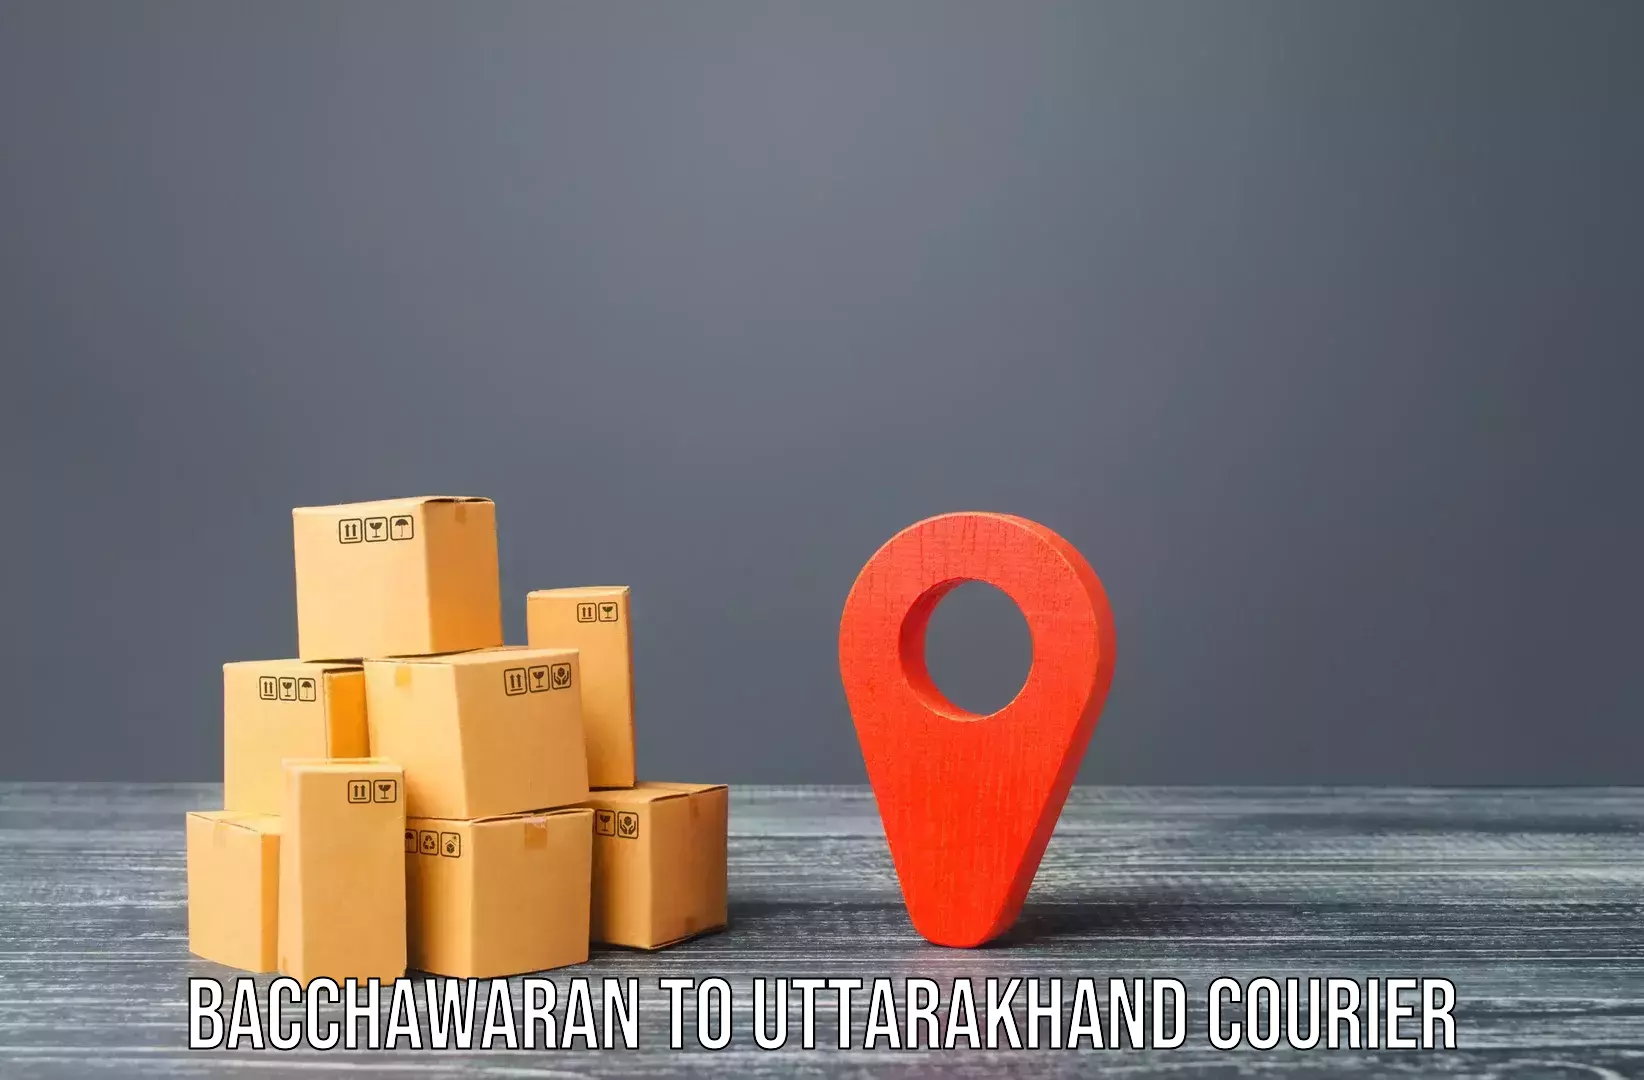 Personalized moving and storage Bacchawaran to Rishikesh